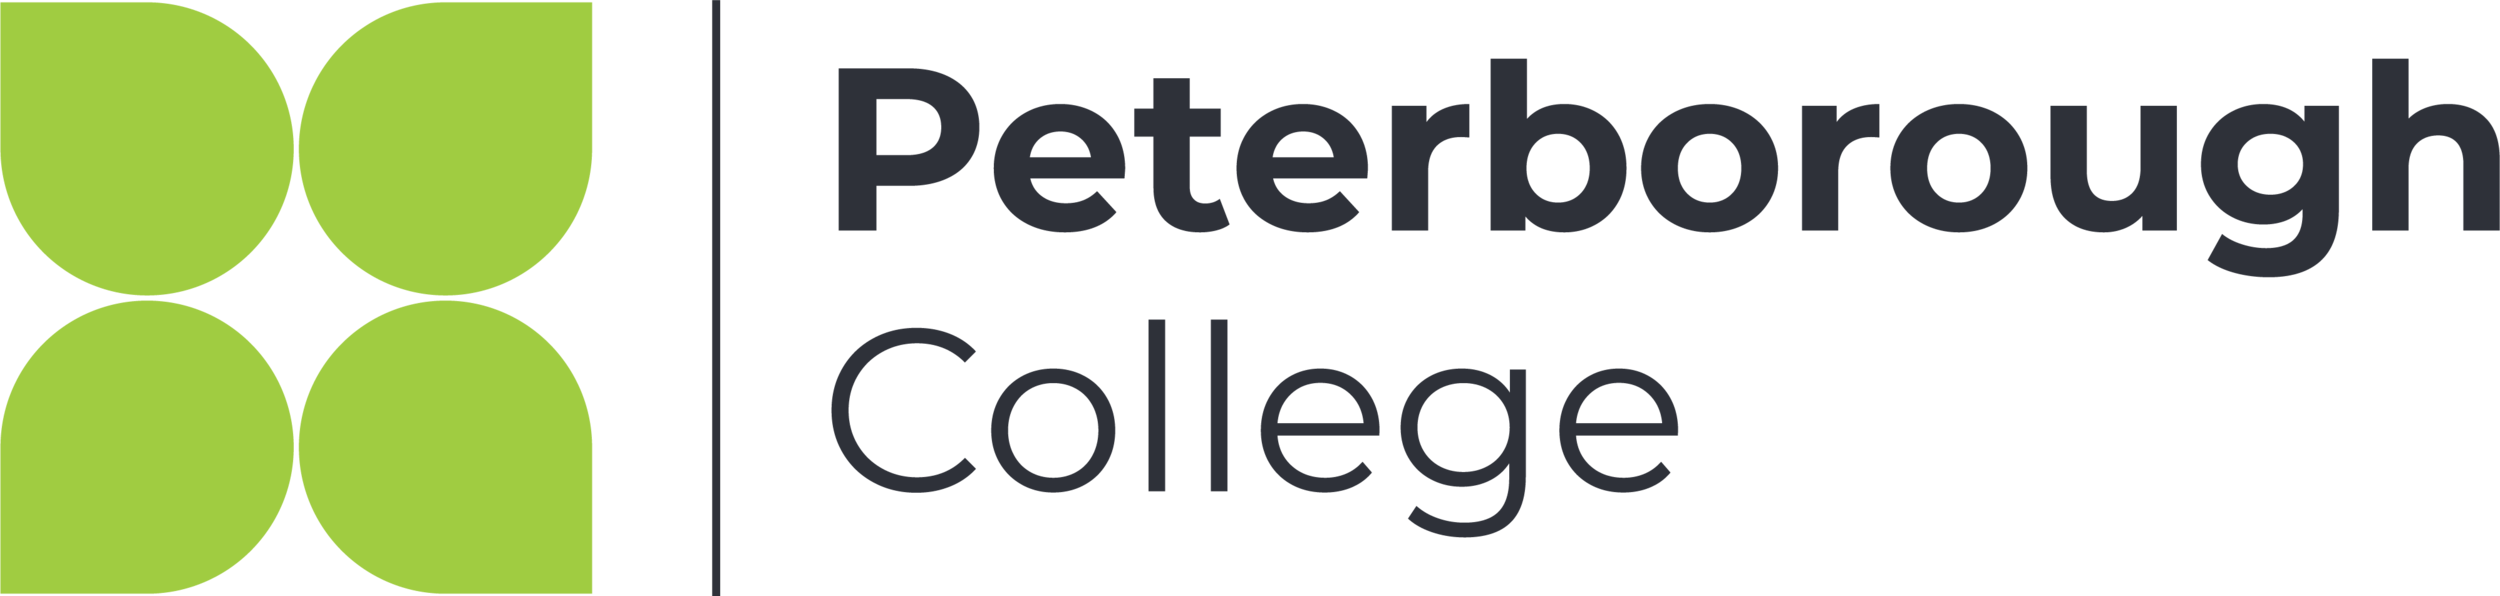 Peterborough College Logo.png